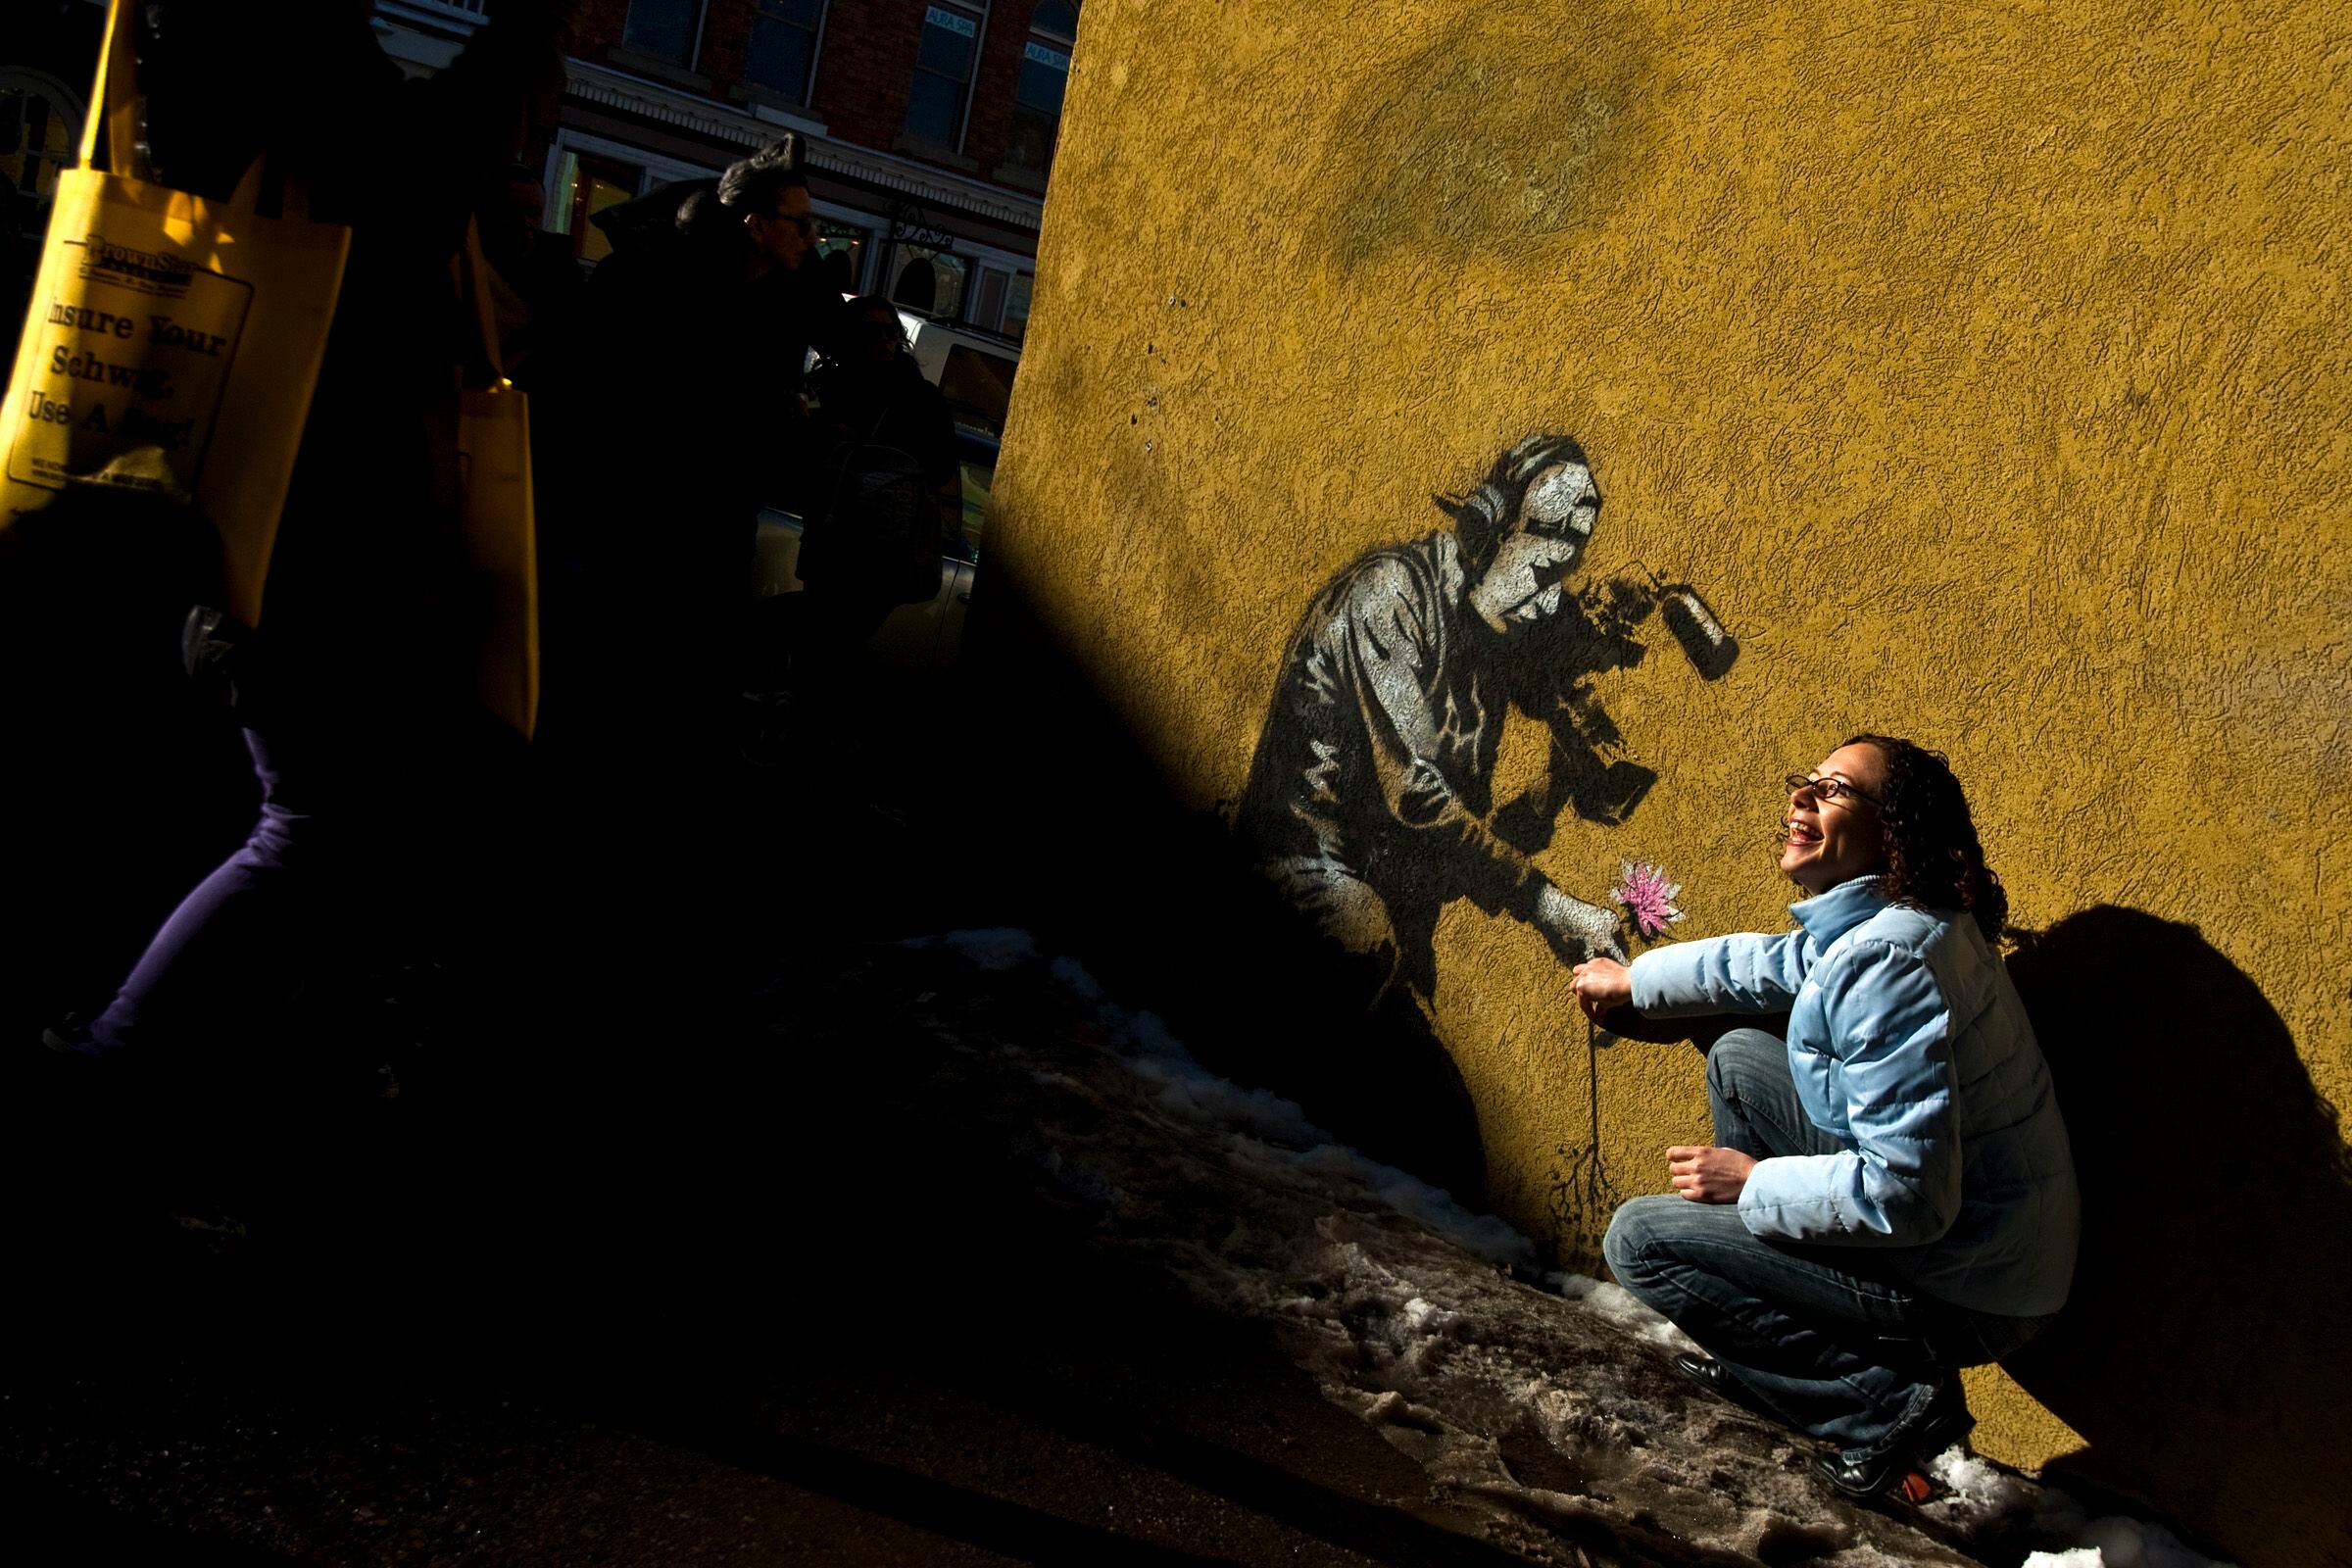 (Chris Detrick | The Salt Lake Tribune) Festivalgoers take a picture next to a Banksy art work during the Sundance Film Festival in Park City, Friday, Jan. 21, 2011.